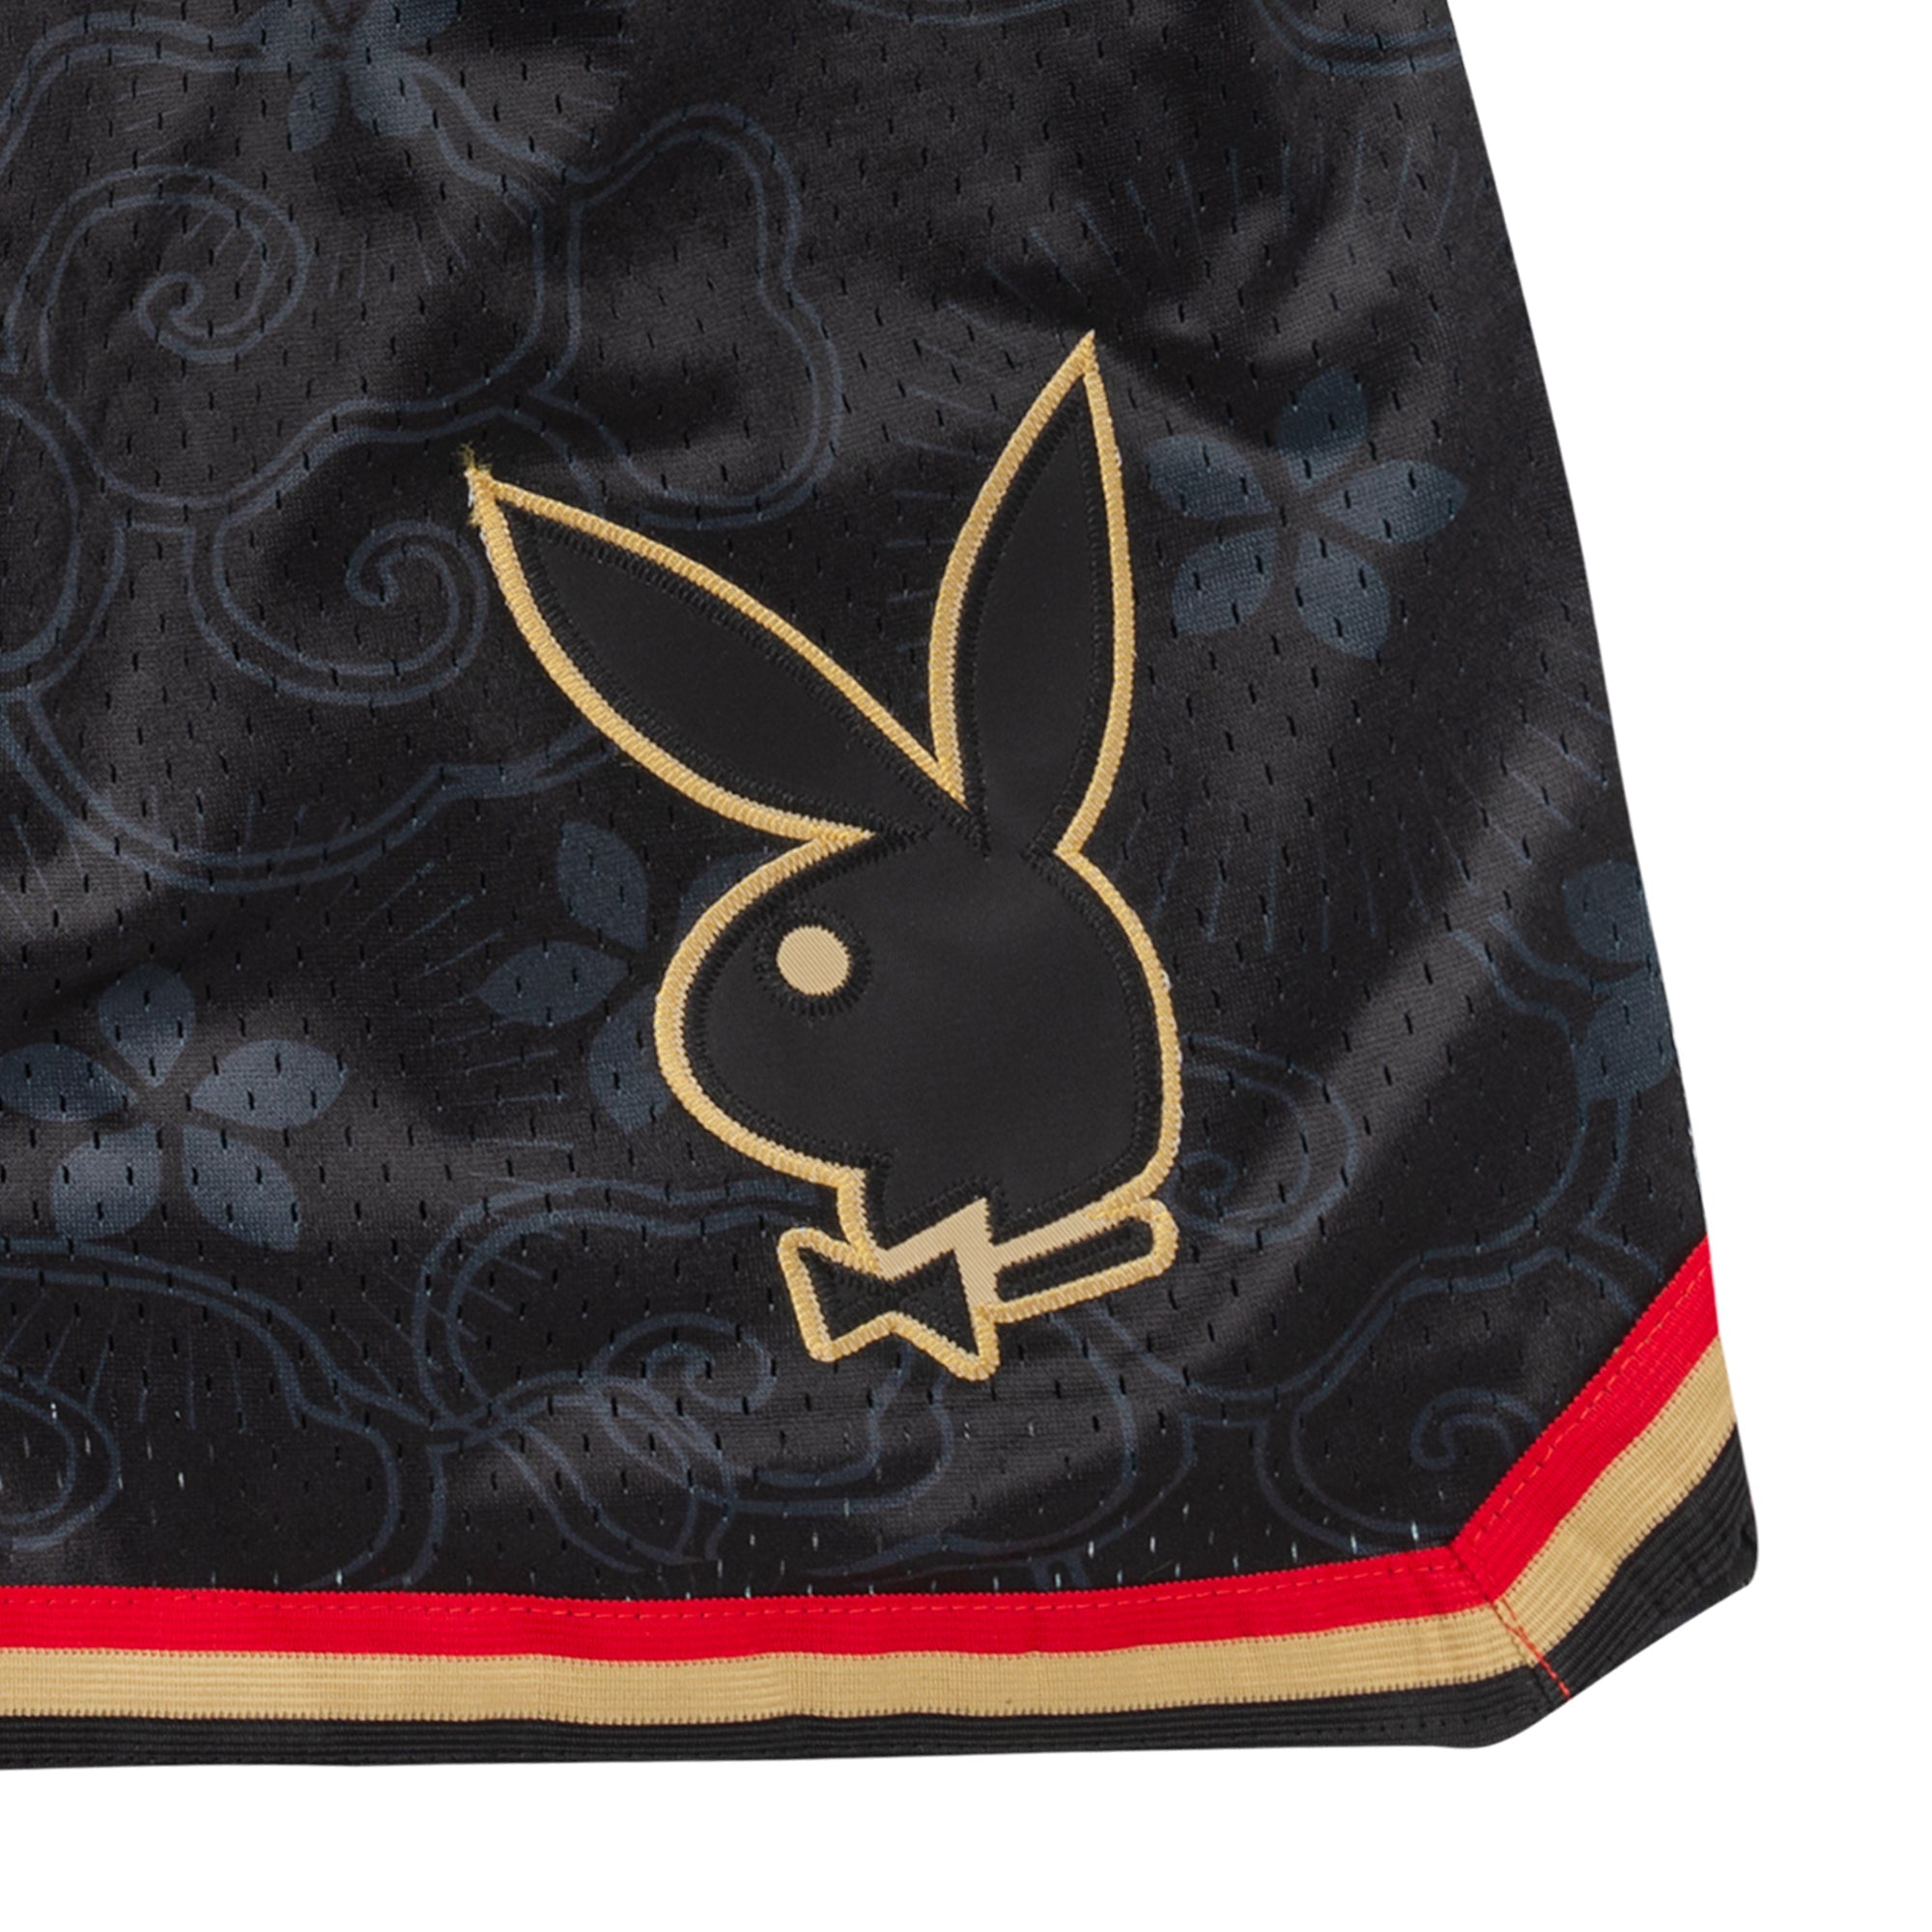 Playboy x Lids Year of the Rabbit Basketball Shorts